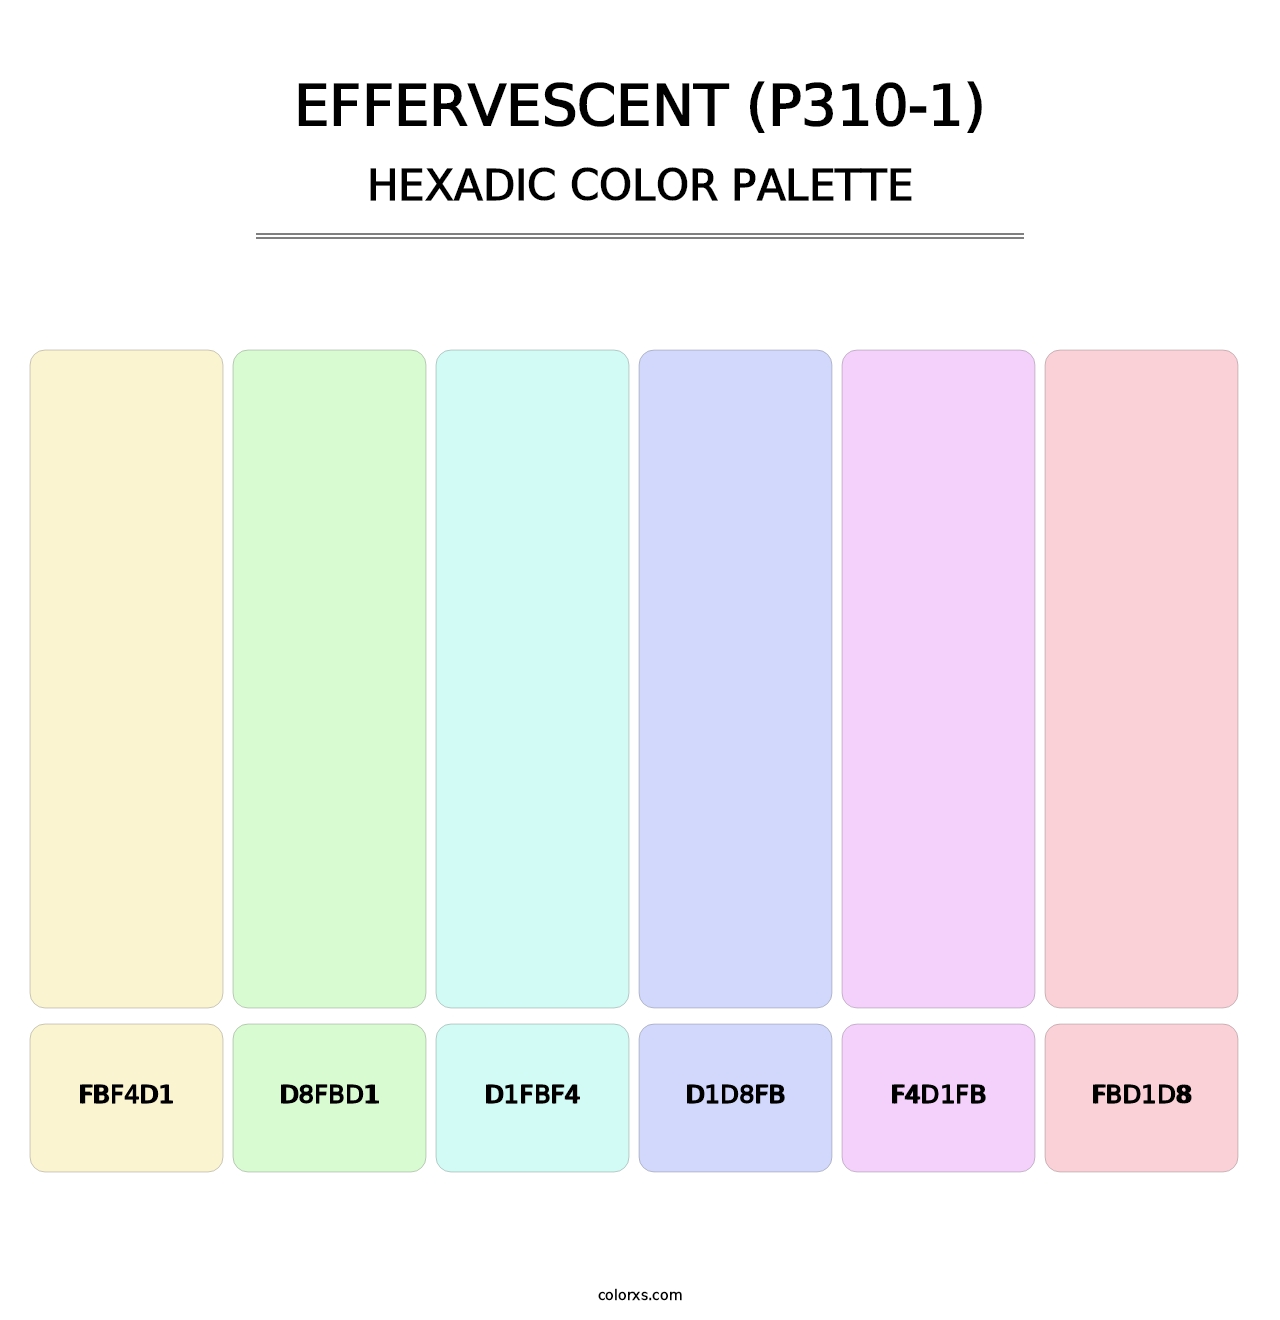 Effervescent (P310-1) - Hexadic Color Palette